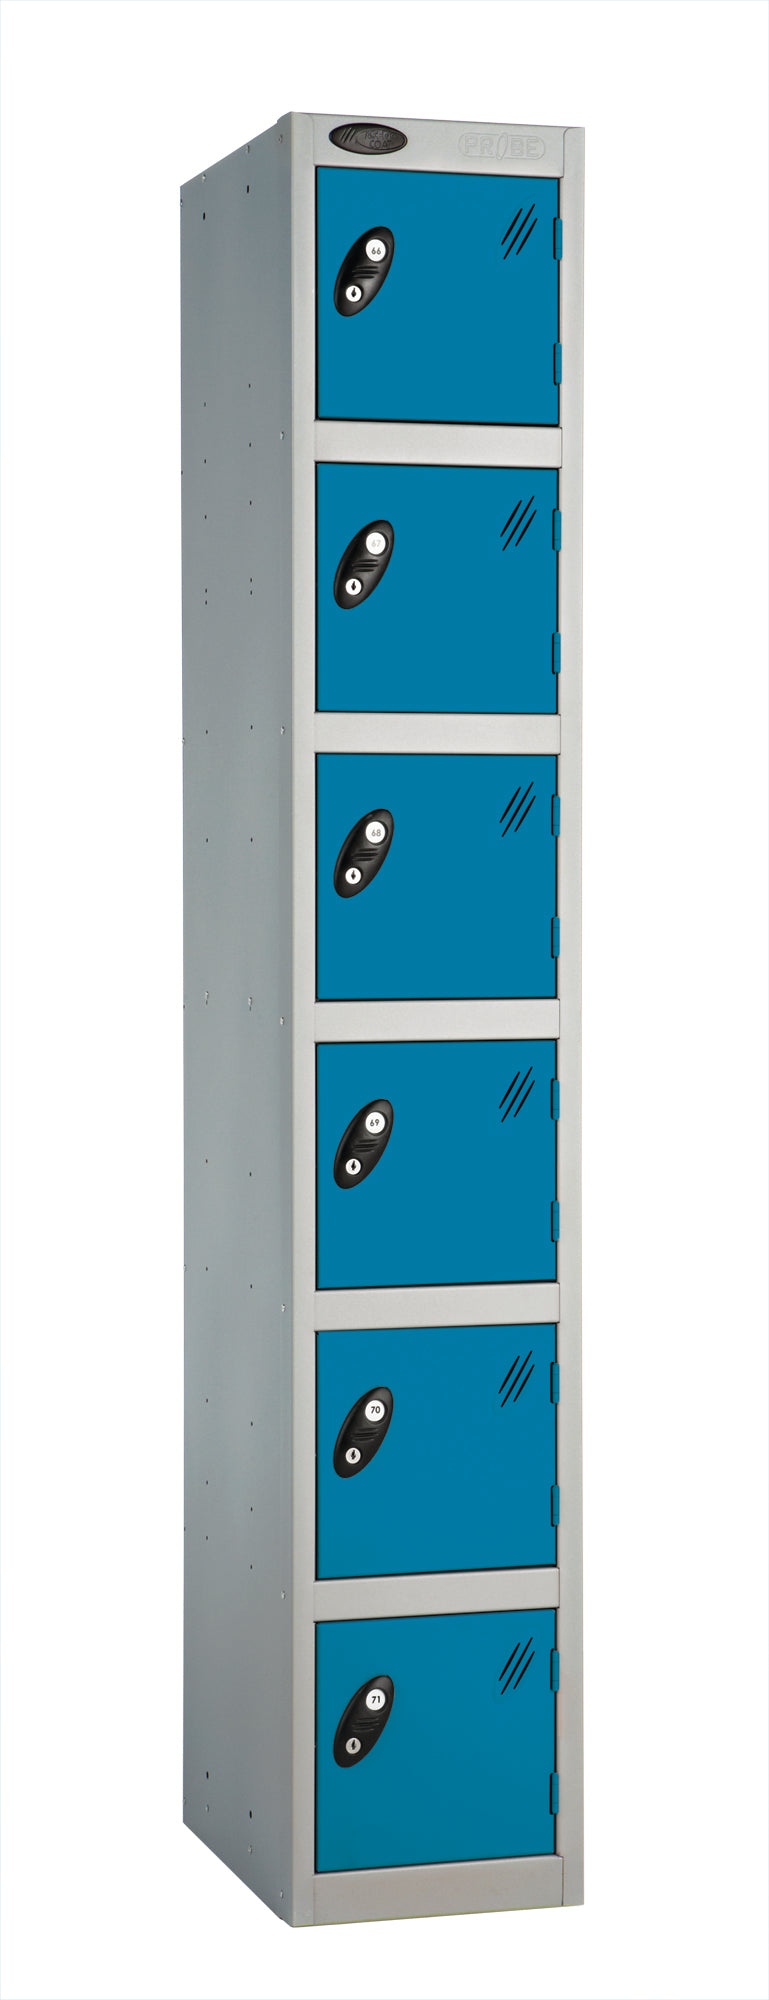 PROBEBOX STANDARD 1 NEST STEEL LOCKERS - ELECTRIC BLUE 6 DOOR Storage Lockers > Lockers > Cabinets > Storage > Probe > One Stop For Safety   